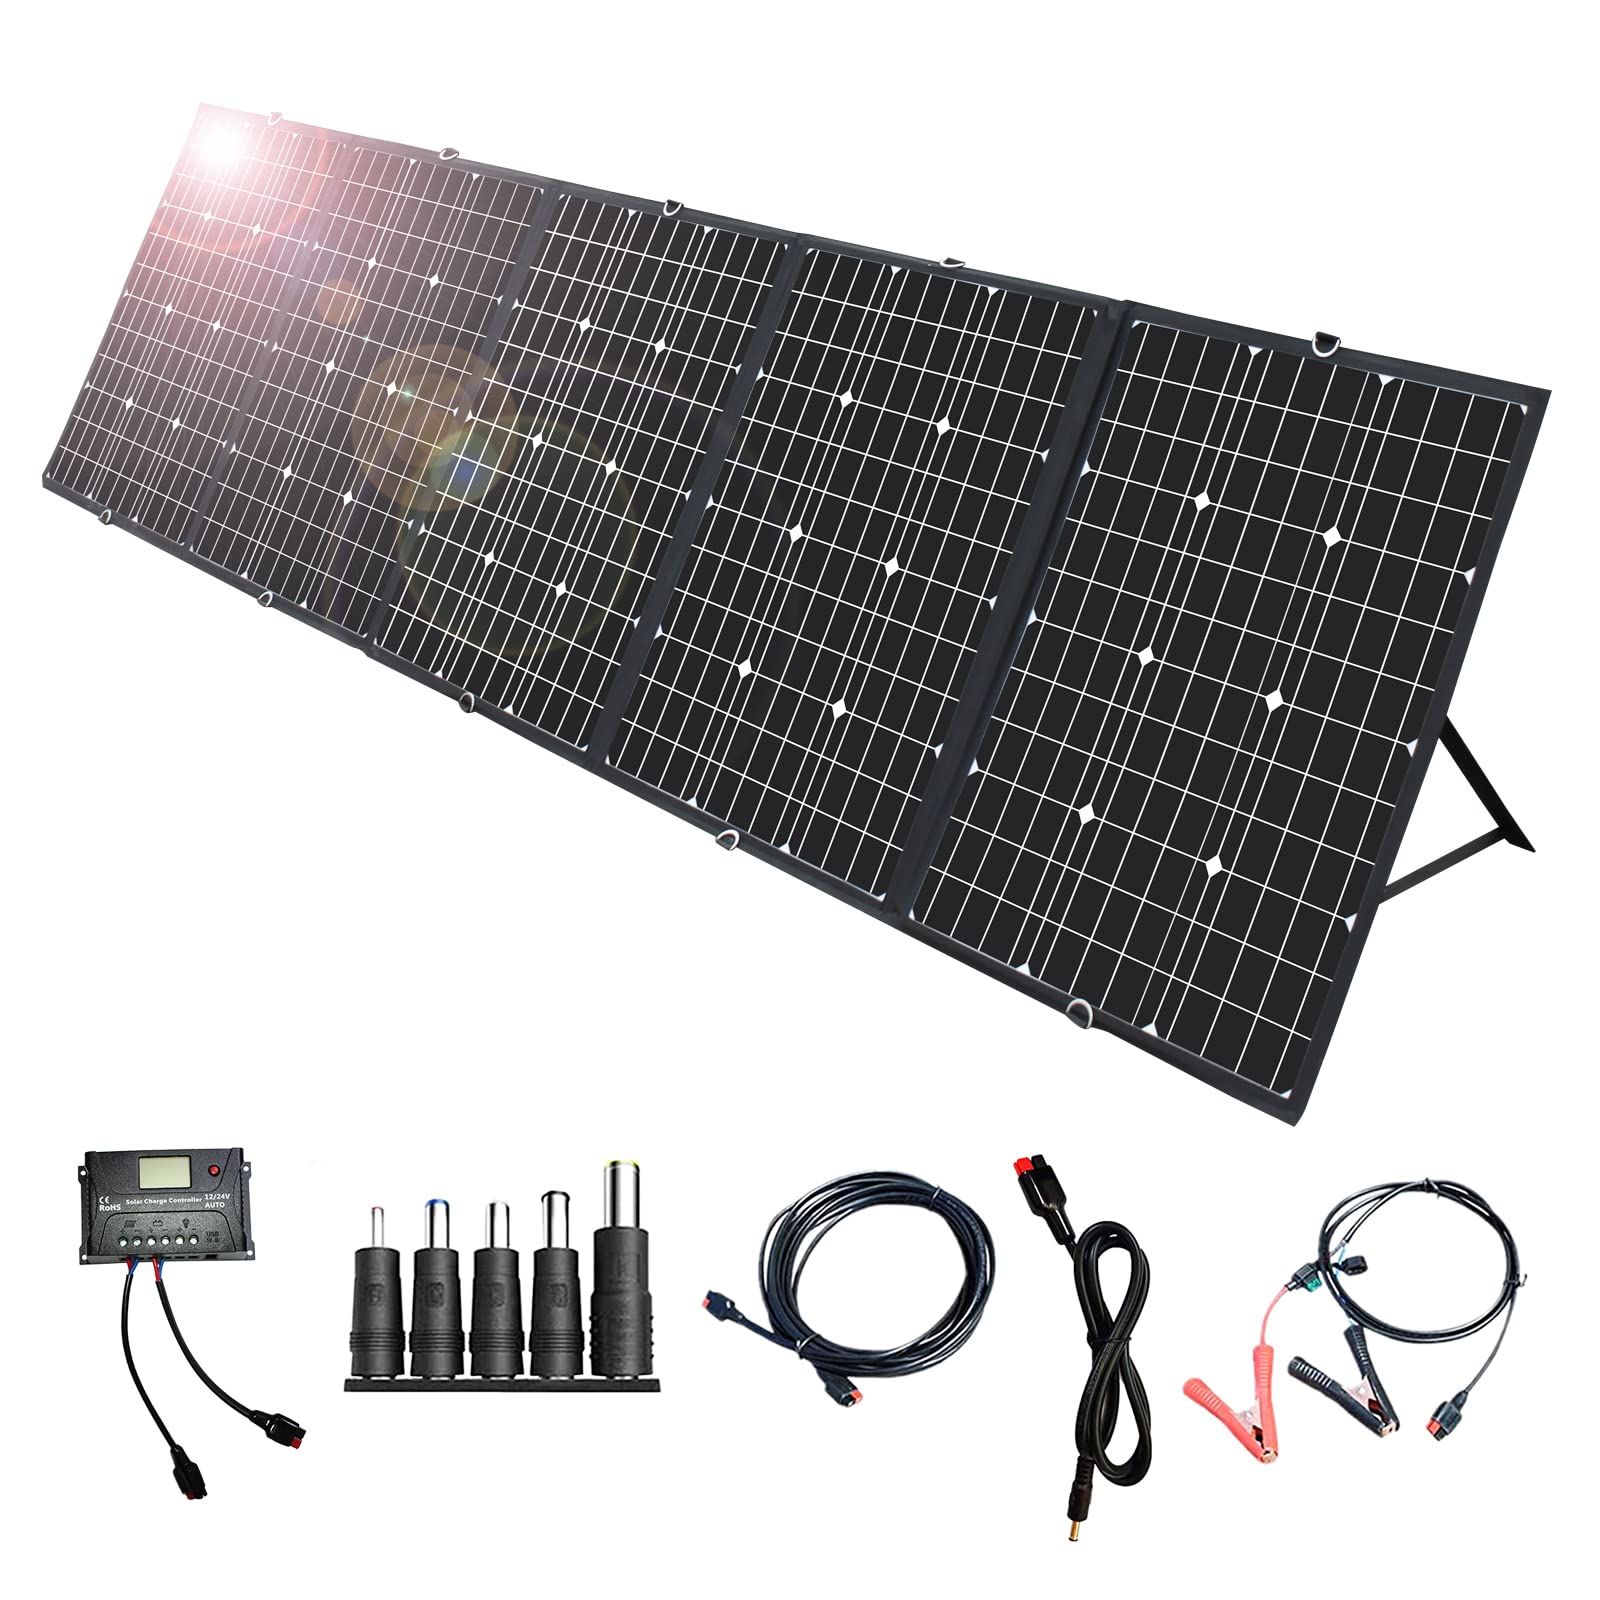 Faltbares Solarpanel 300W mit 20A Controller-300W Tragbares Solarpanel für tragbare Kraftwerke und RV-Batterien Camping-Handys Laptop,12V/24V Monokristallin (hohe Effizienz) Ladegerät-USB-Ausgängen